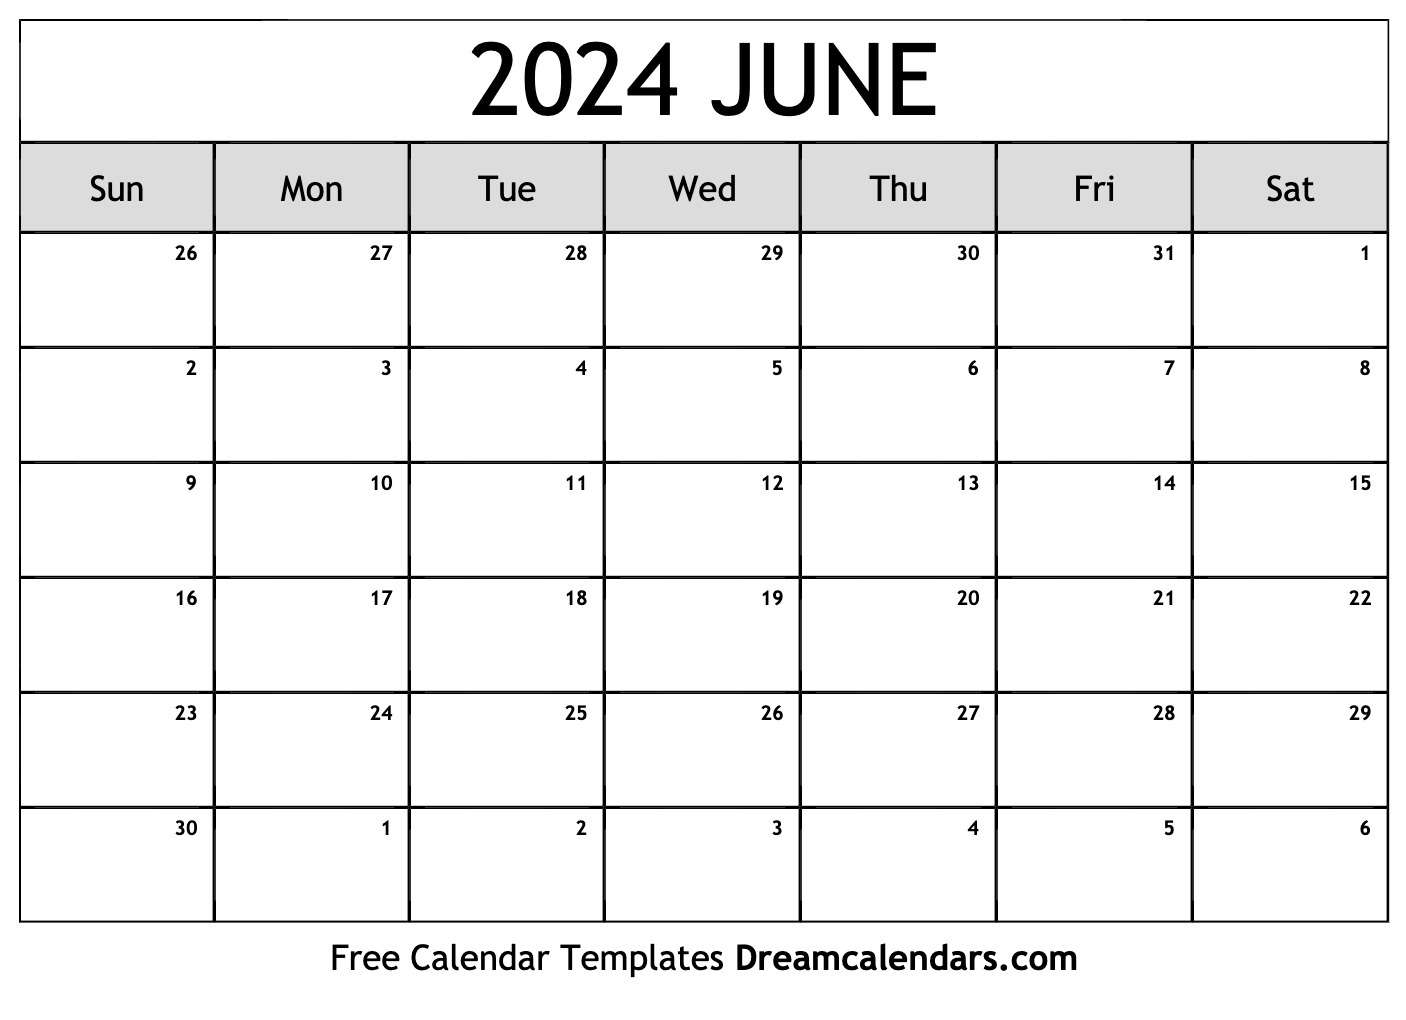 June 2024 Calendar - Free Printable With Holidays And Observances inside June 14 2024 Calendar